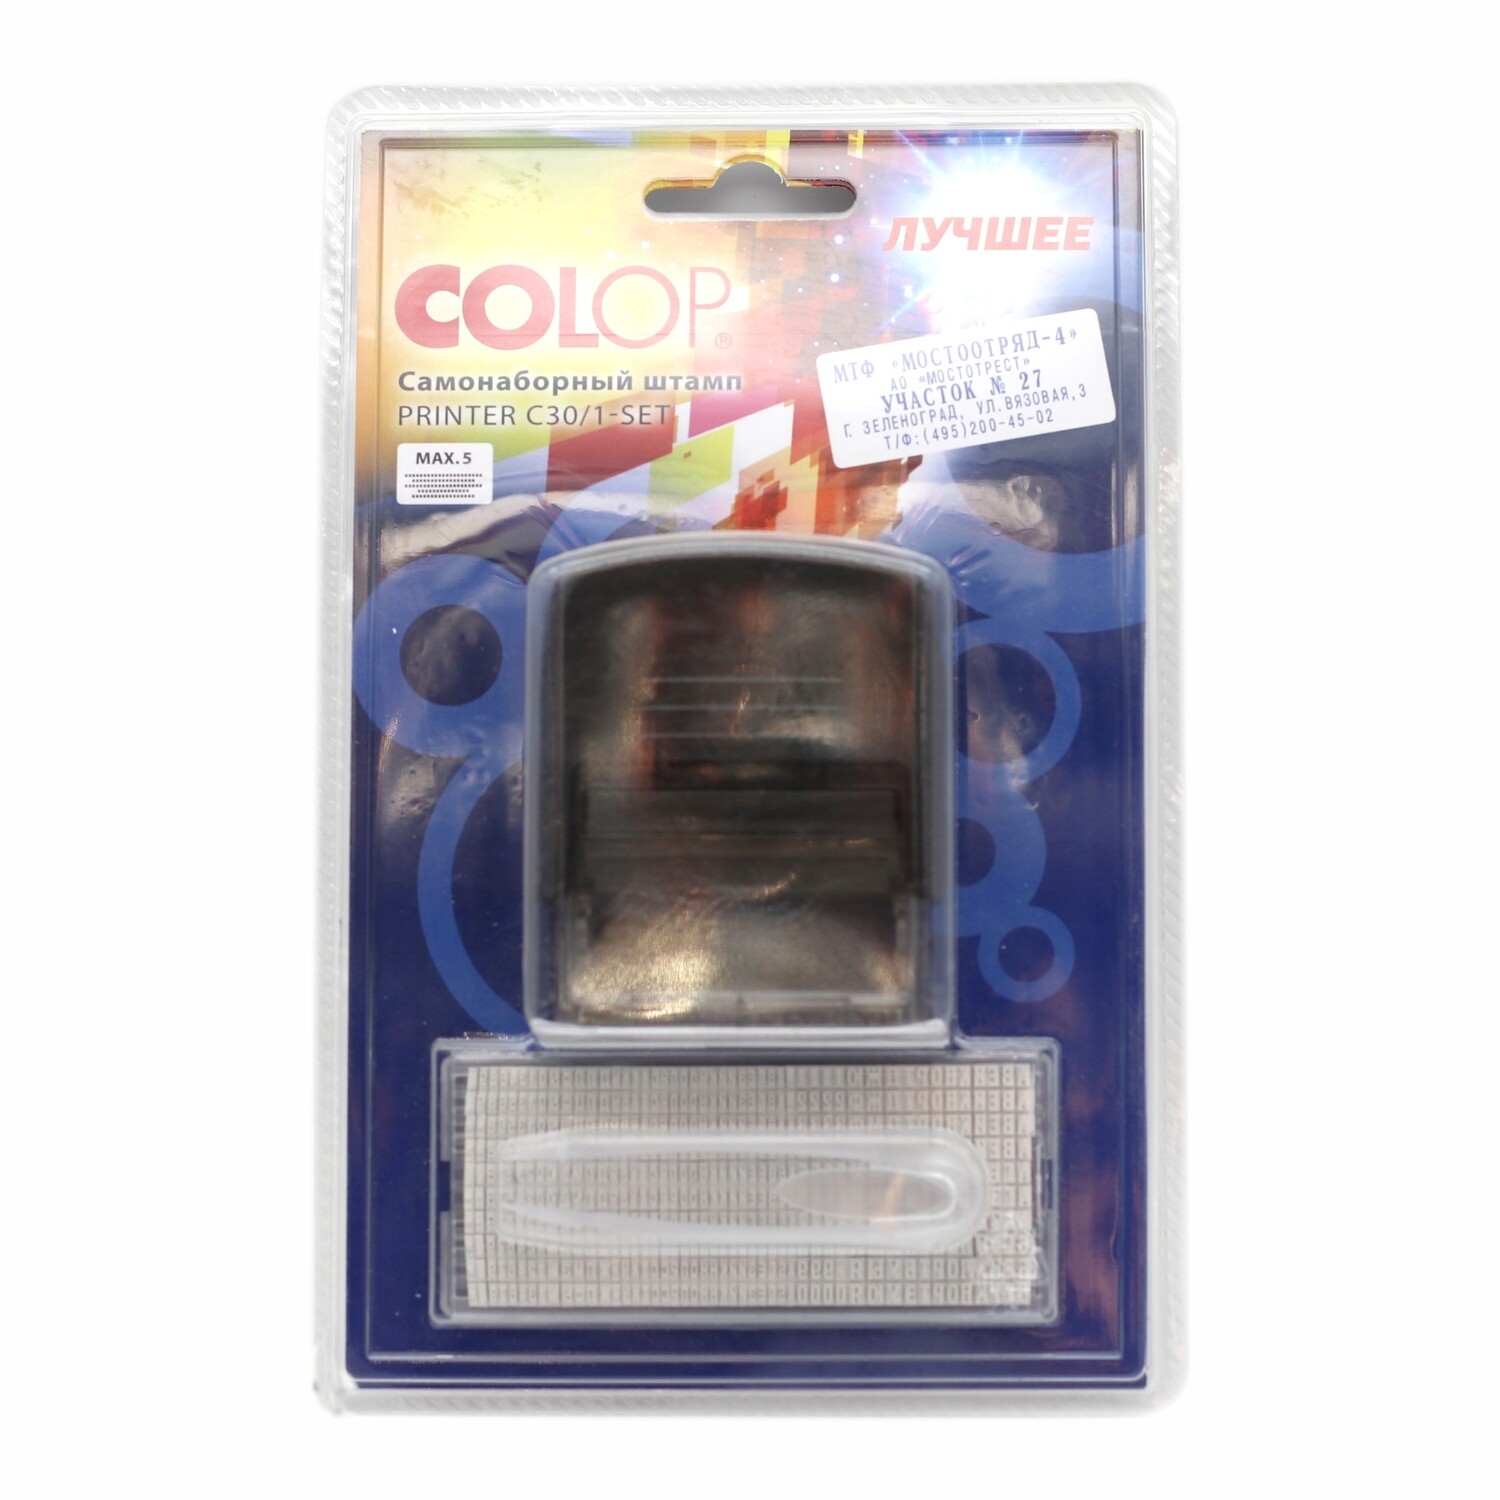 COLOP самонаборный штамп PRINTER C20-SET